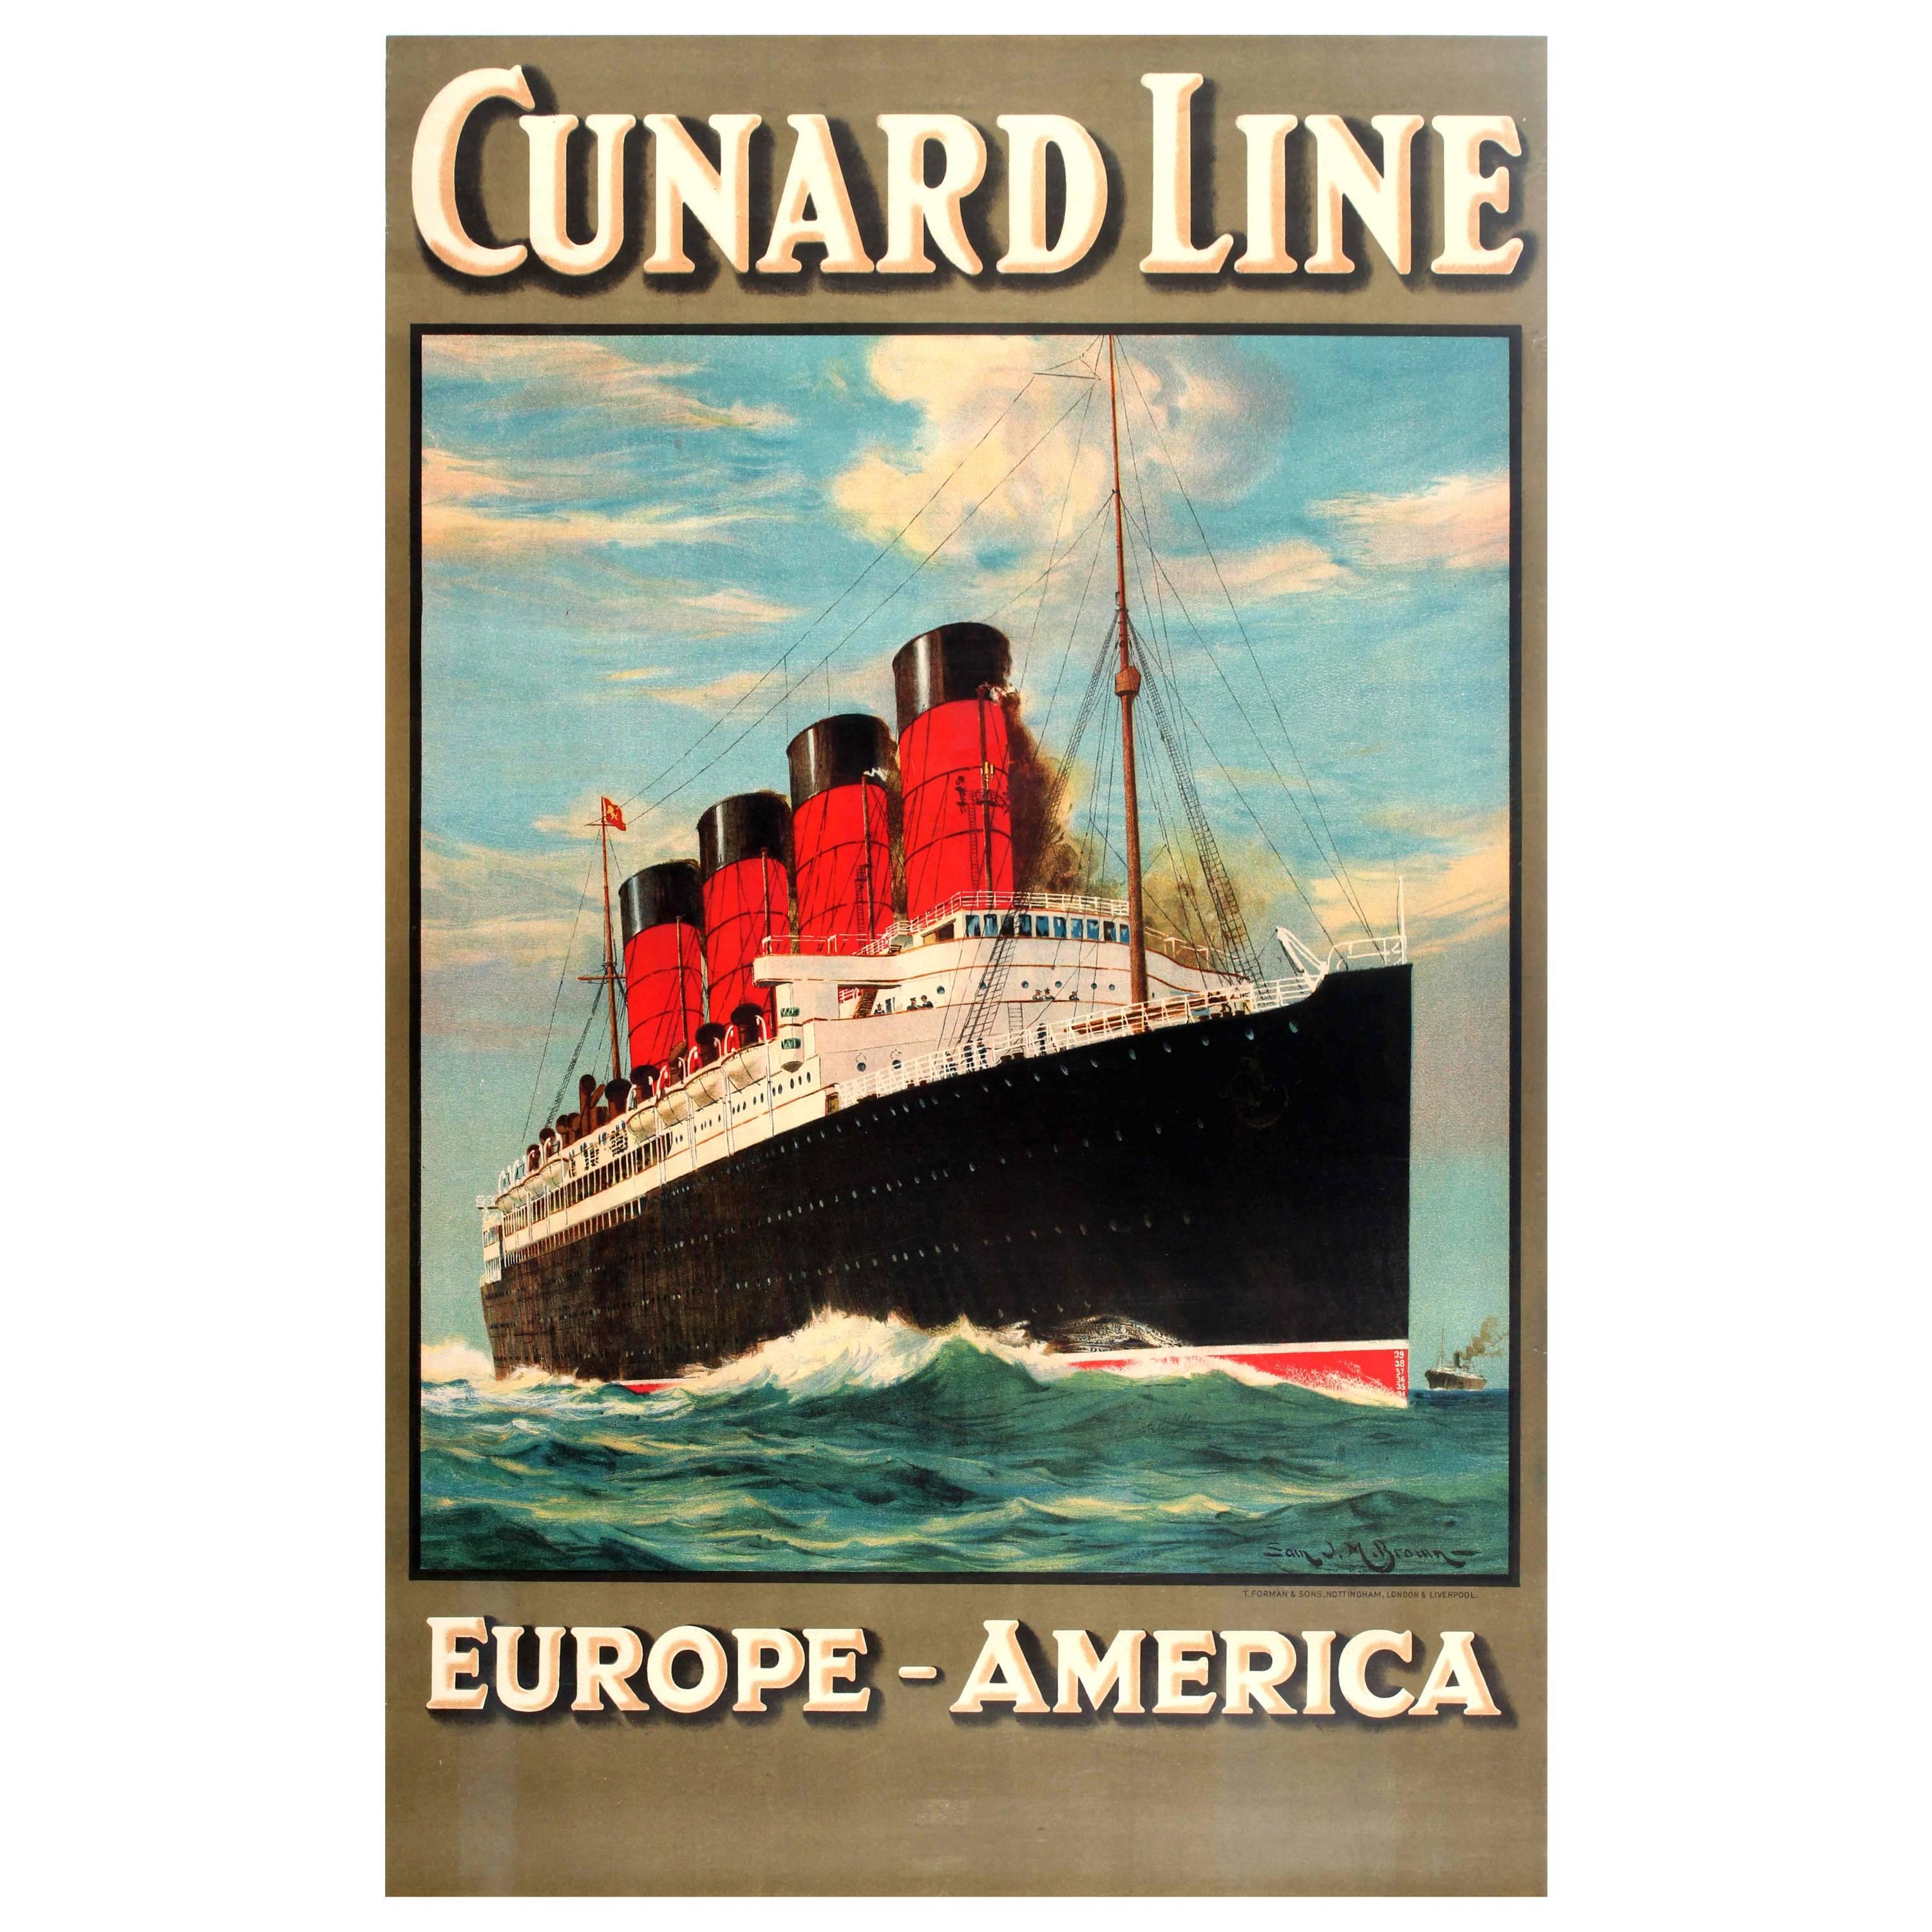 Original 1920s Cunard Line Cruise Ship Travel Advertising Poster Europe-America